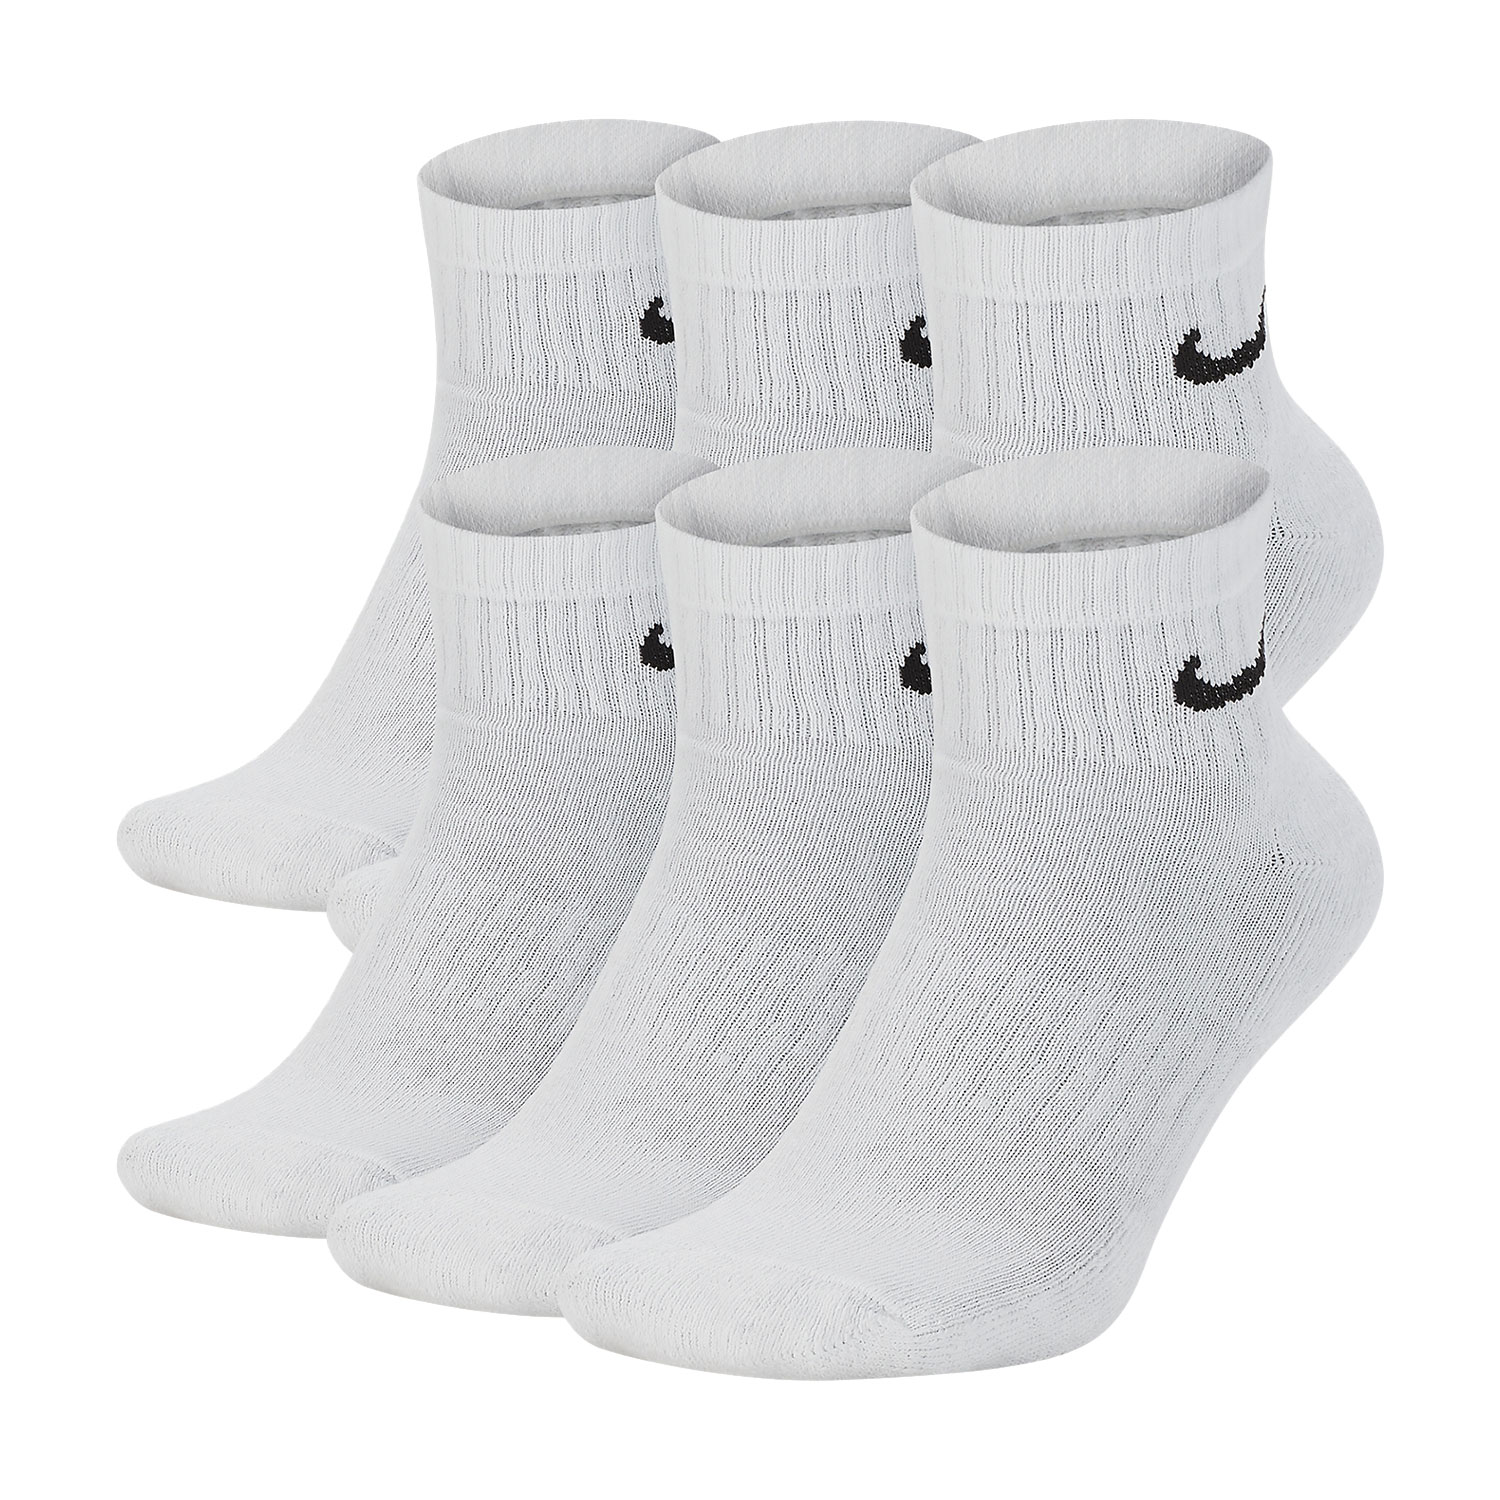 Nike Everyday Cushion x 6 Socks - White/Black